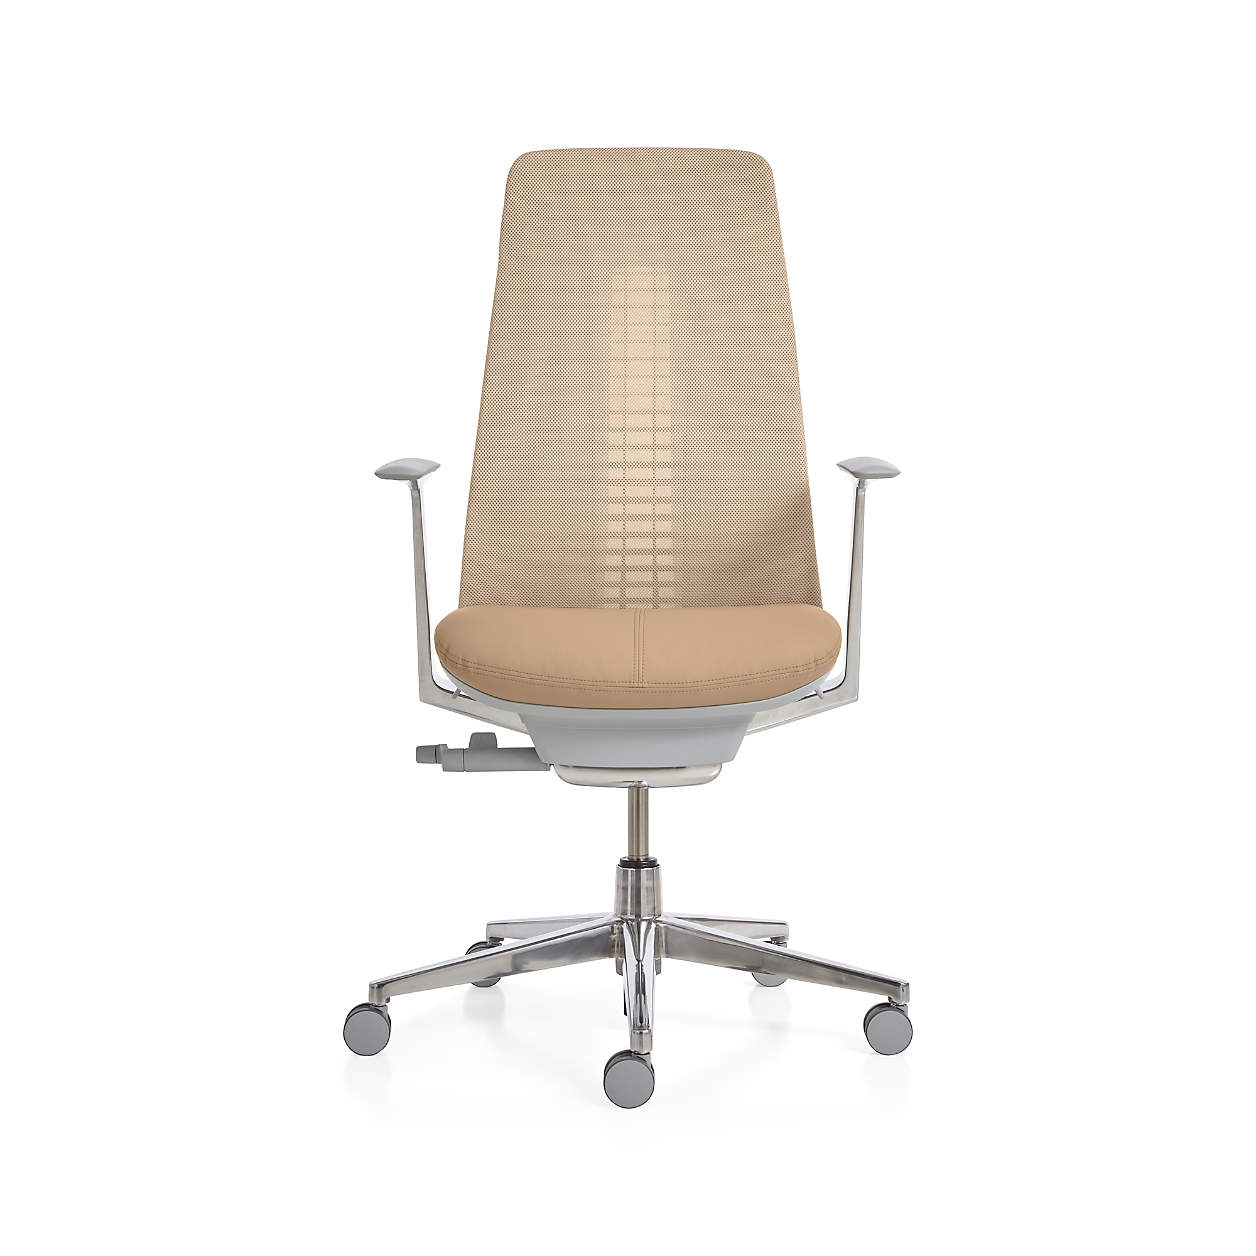 Haworth ® Pacific Fern ™ High Back Desk Chair - Image 0